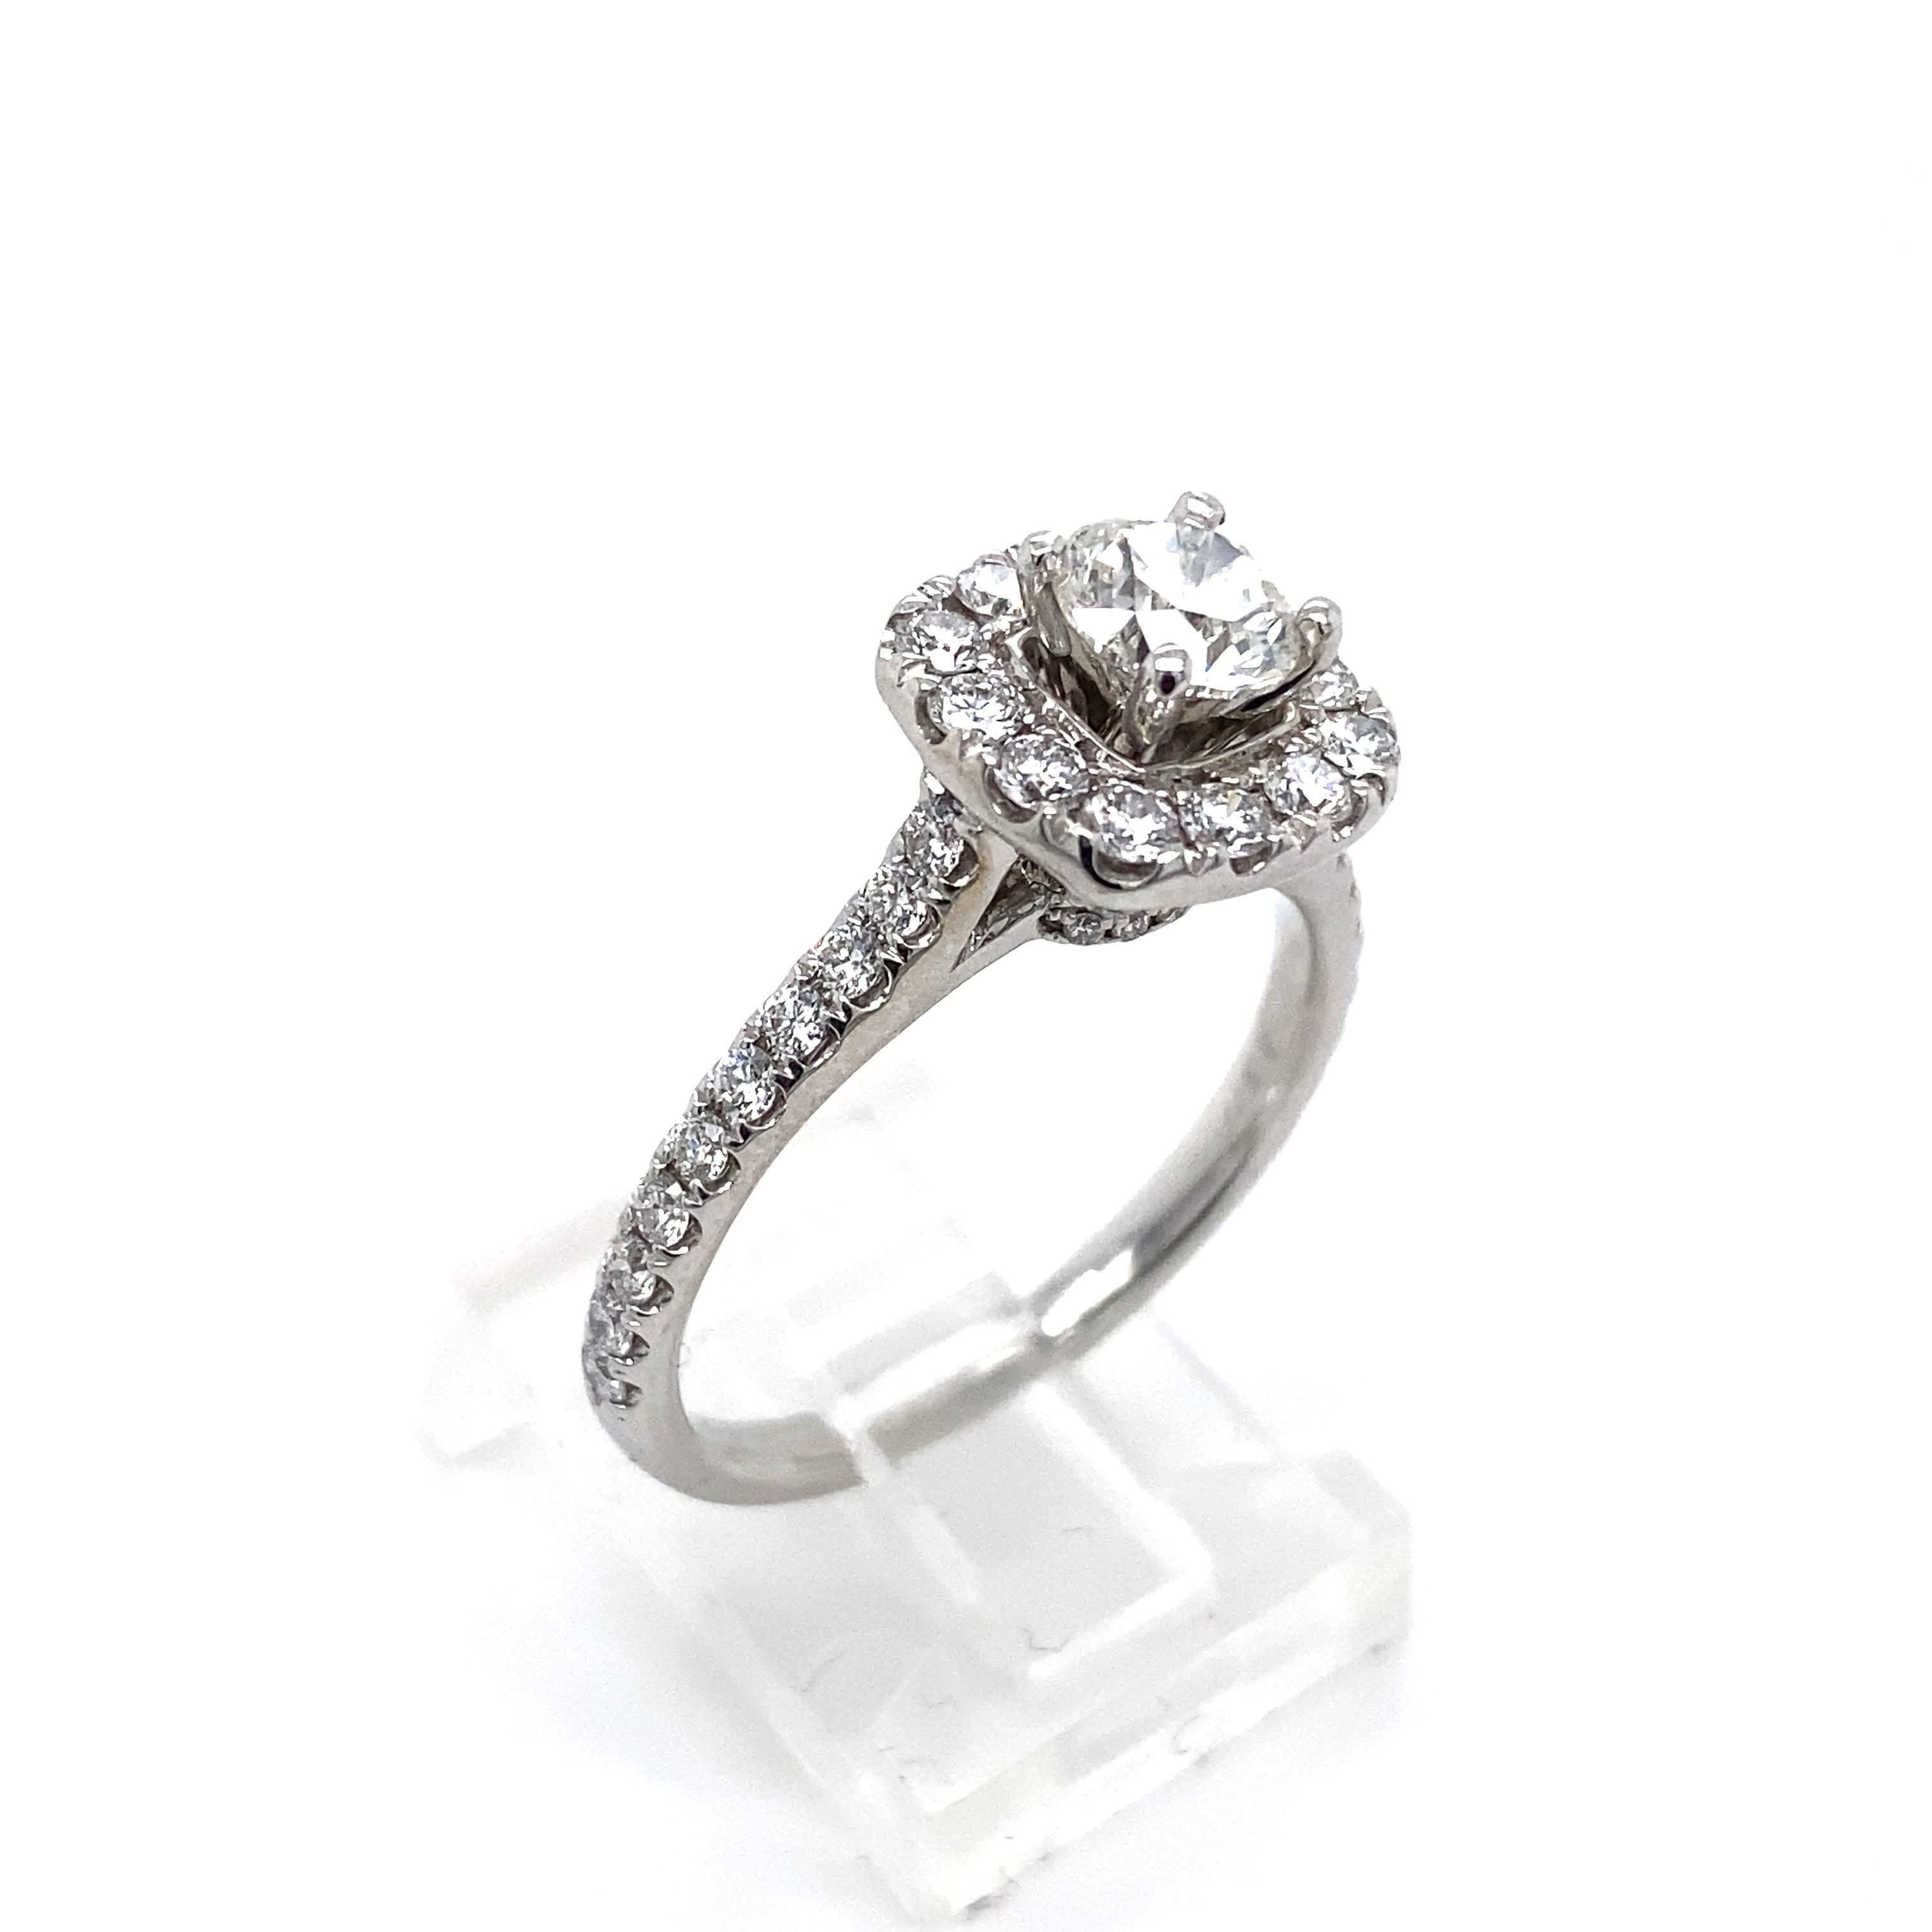 NEIL LANE Round Diamond Halo 1.27 tcw Engagement Ring in 14kt White Gold 3